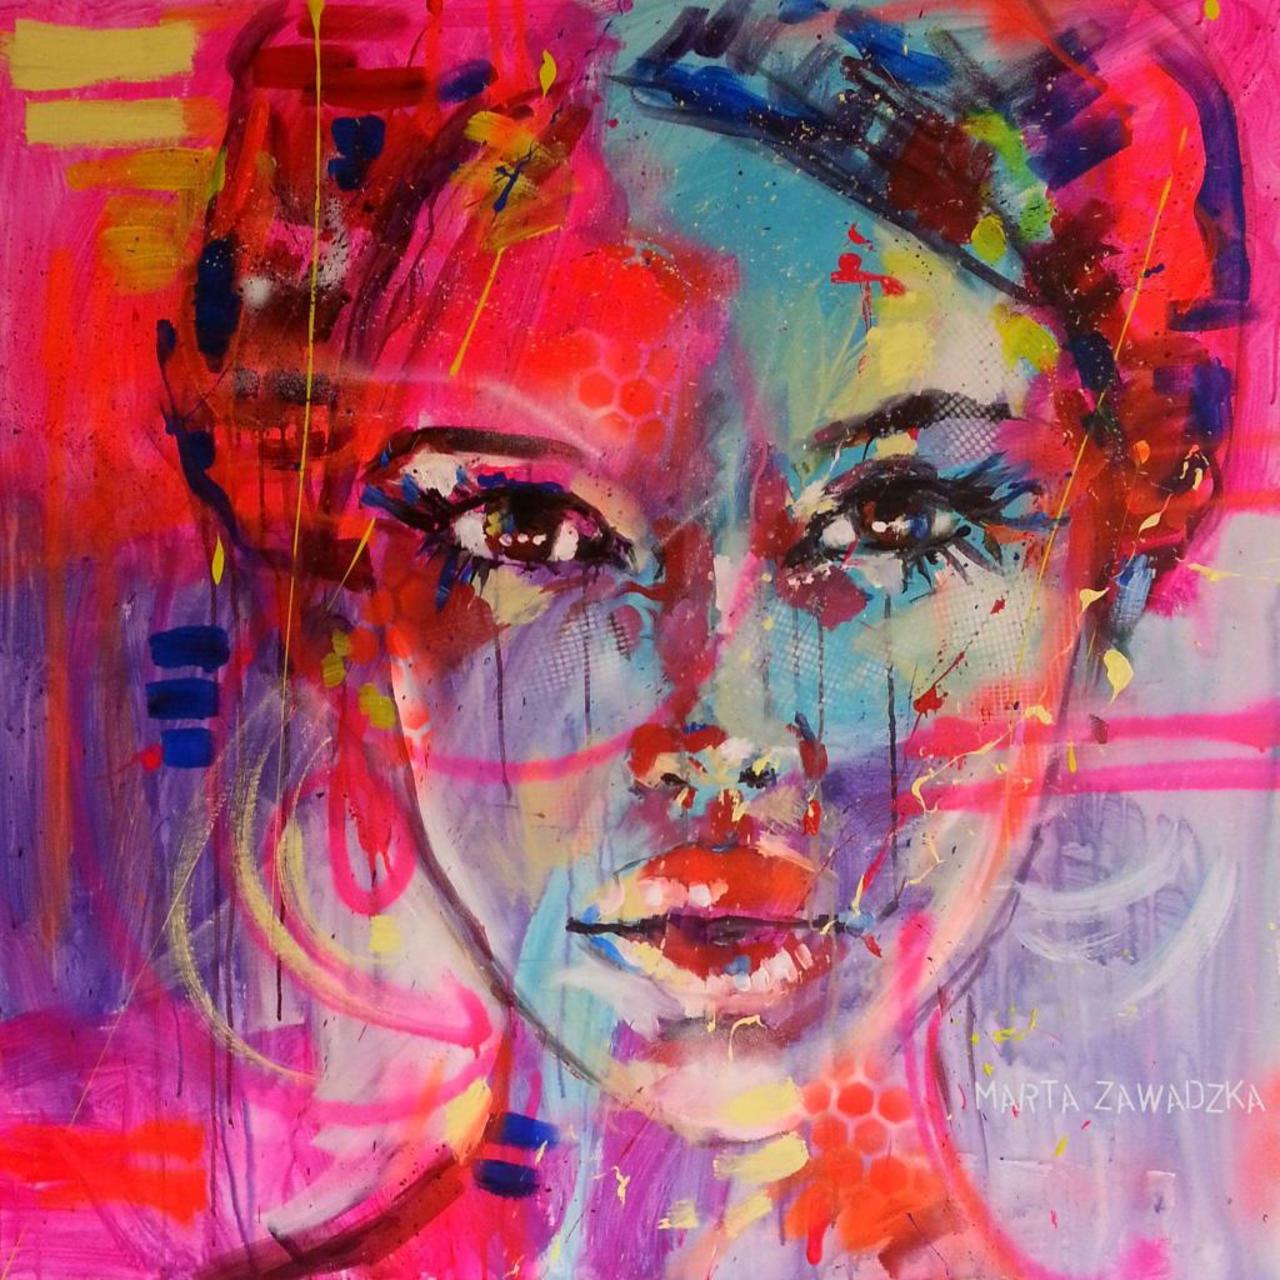 RT @marta_zawadzka: #Girl on #canvas :) 100x 100cm "Ellen" :) #painting #artwork #graffiti #streetart #popart #portrait #women http://t.co/JU1bs0jP4Z